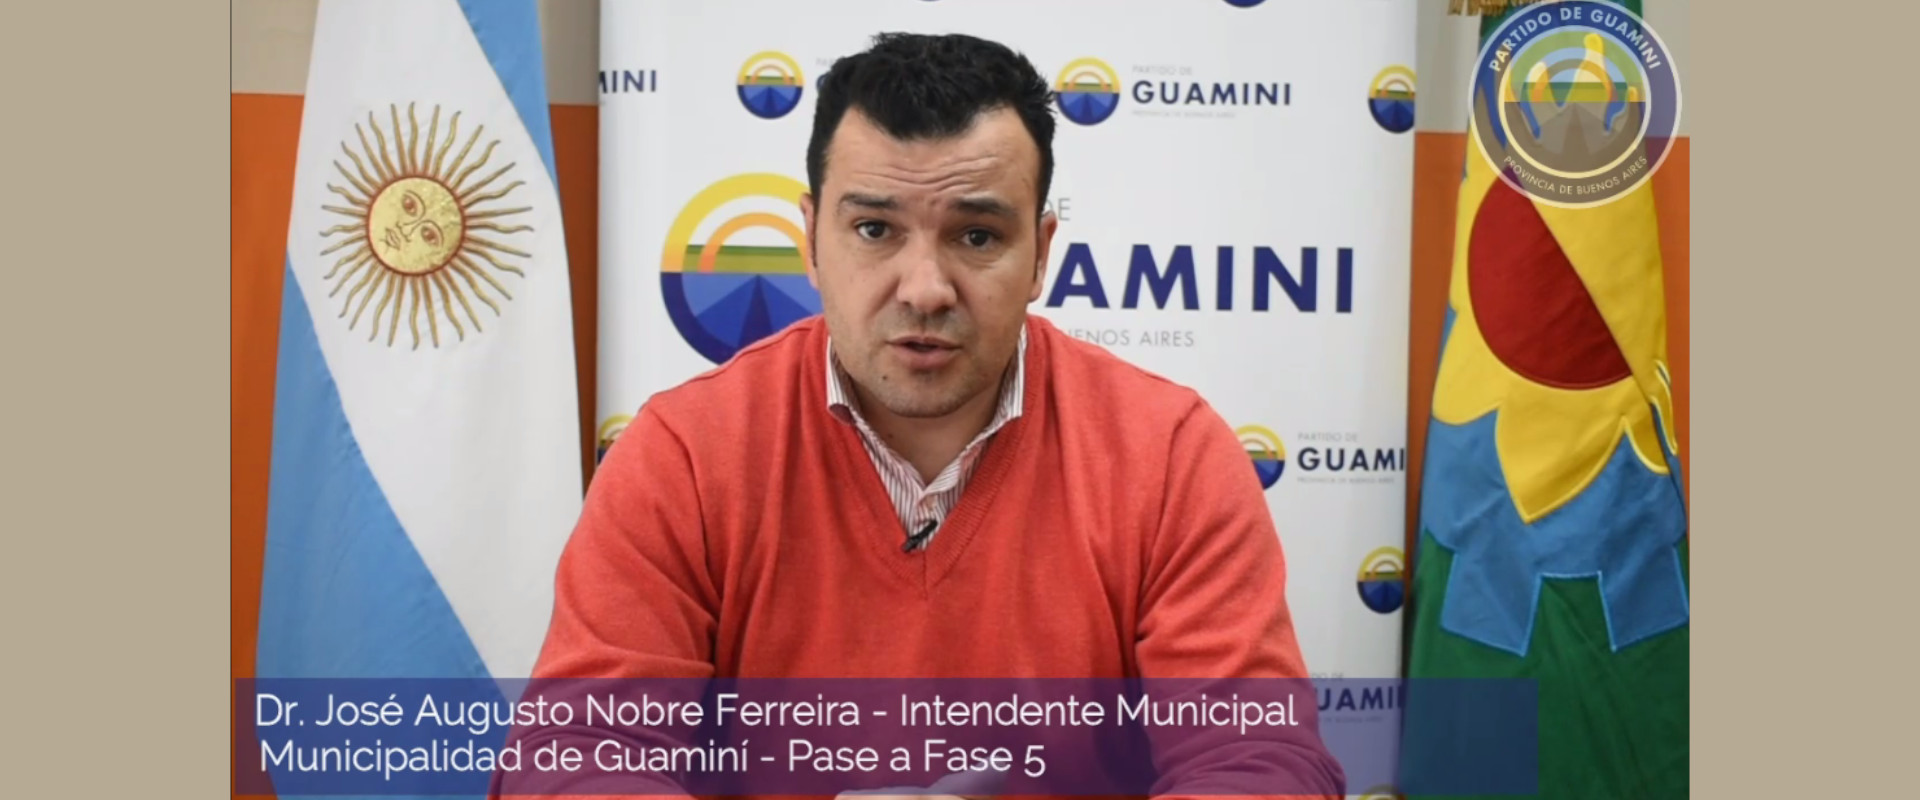 Mensaje del Intendente Municipal José Augusto Nobre Ferreria.